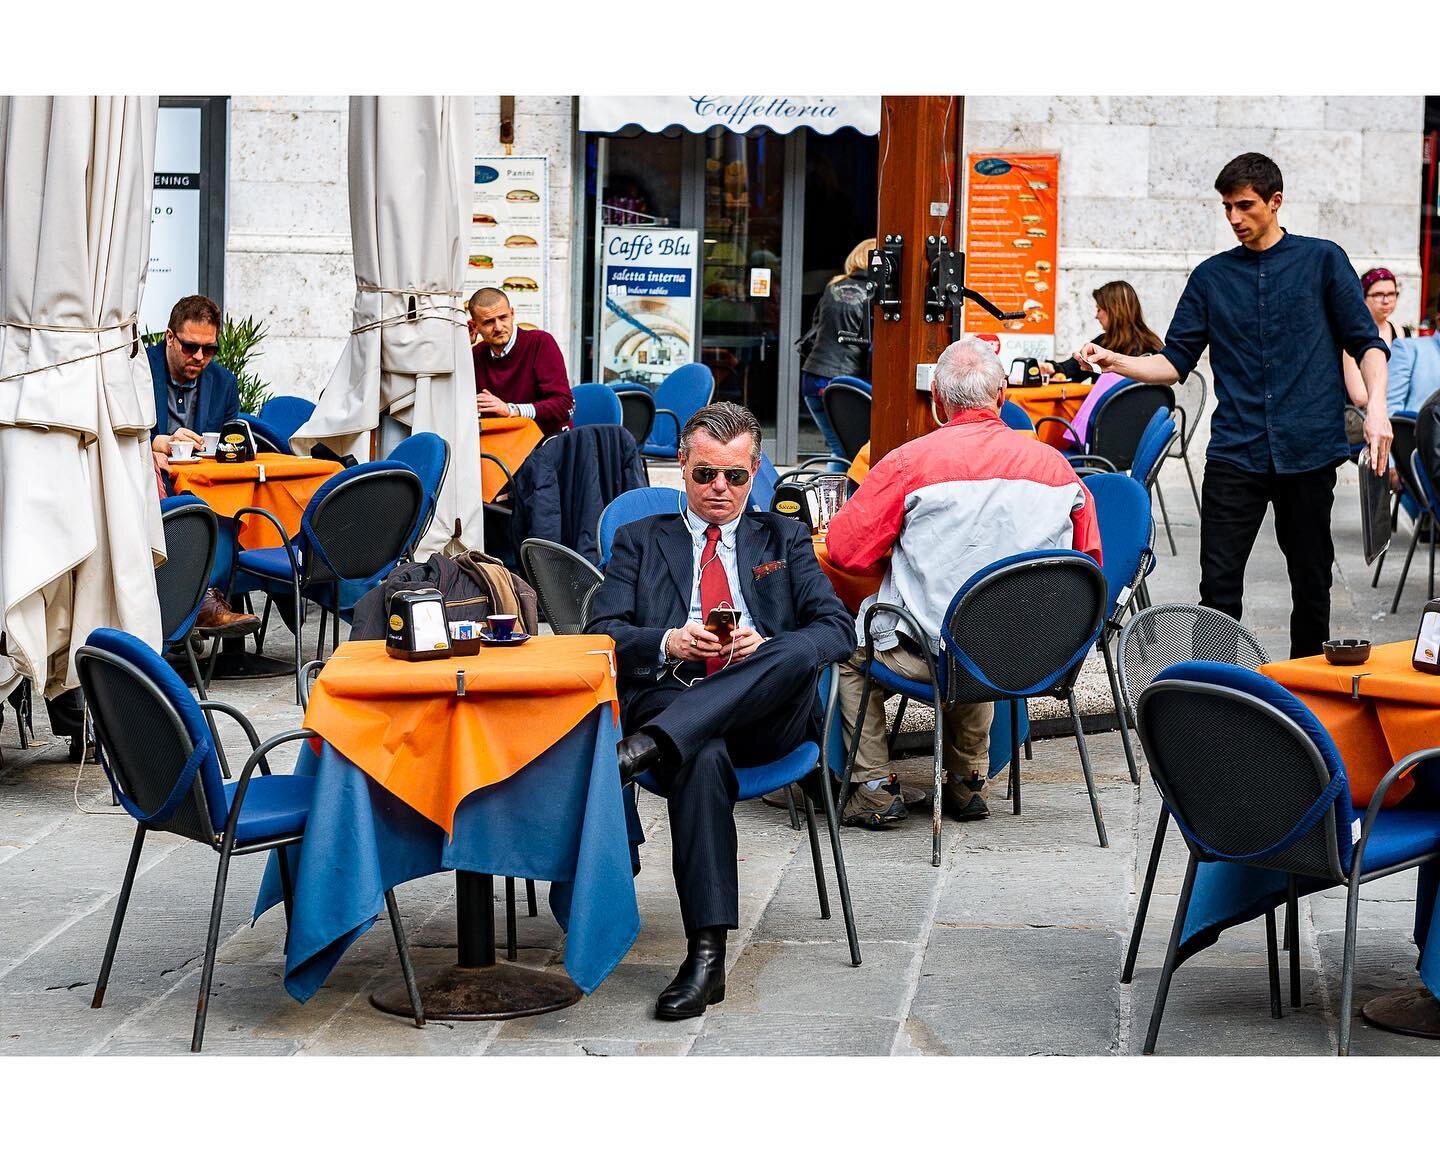 Perugia Caffetteria - Perugia, Italy - 2019

#nilevinczphotography #nikonnofilter #yourshotphotographer #streetphotography #travelphotography #sweetstreetbeat #life_is_street #peopleinplaces #urbanlandscapes #photocinematica #eyeshotmag #madewithligh